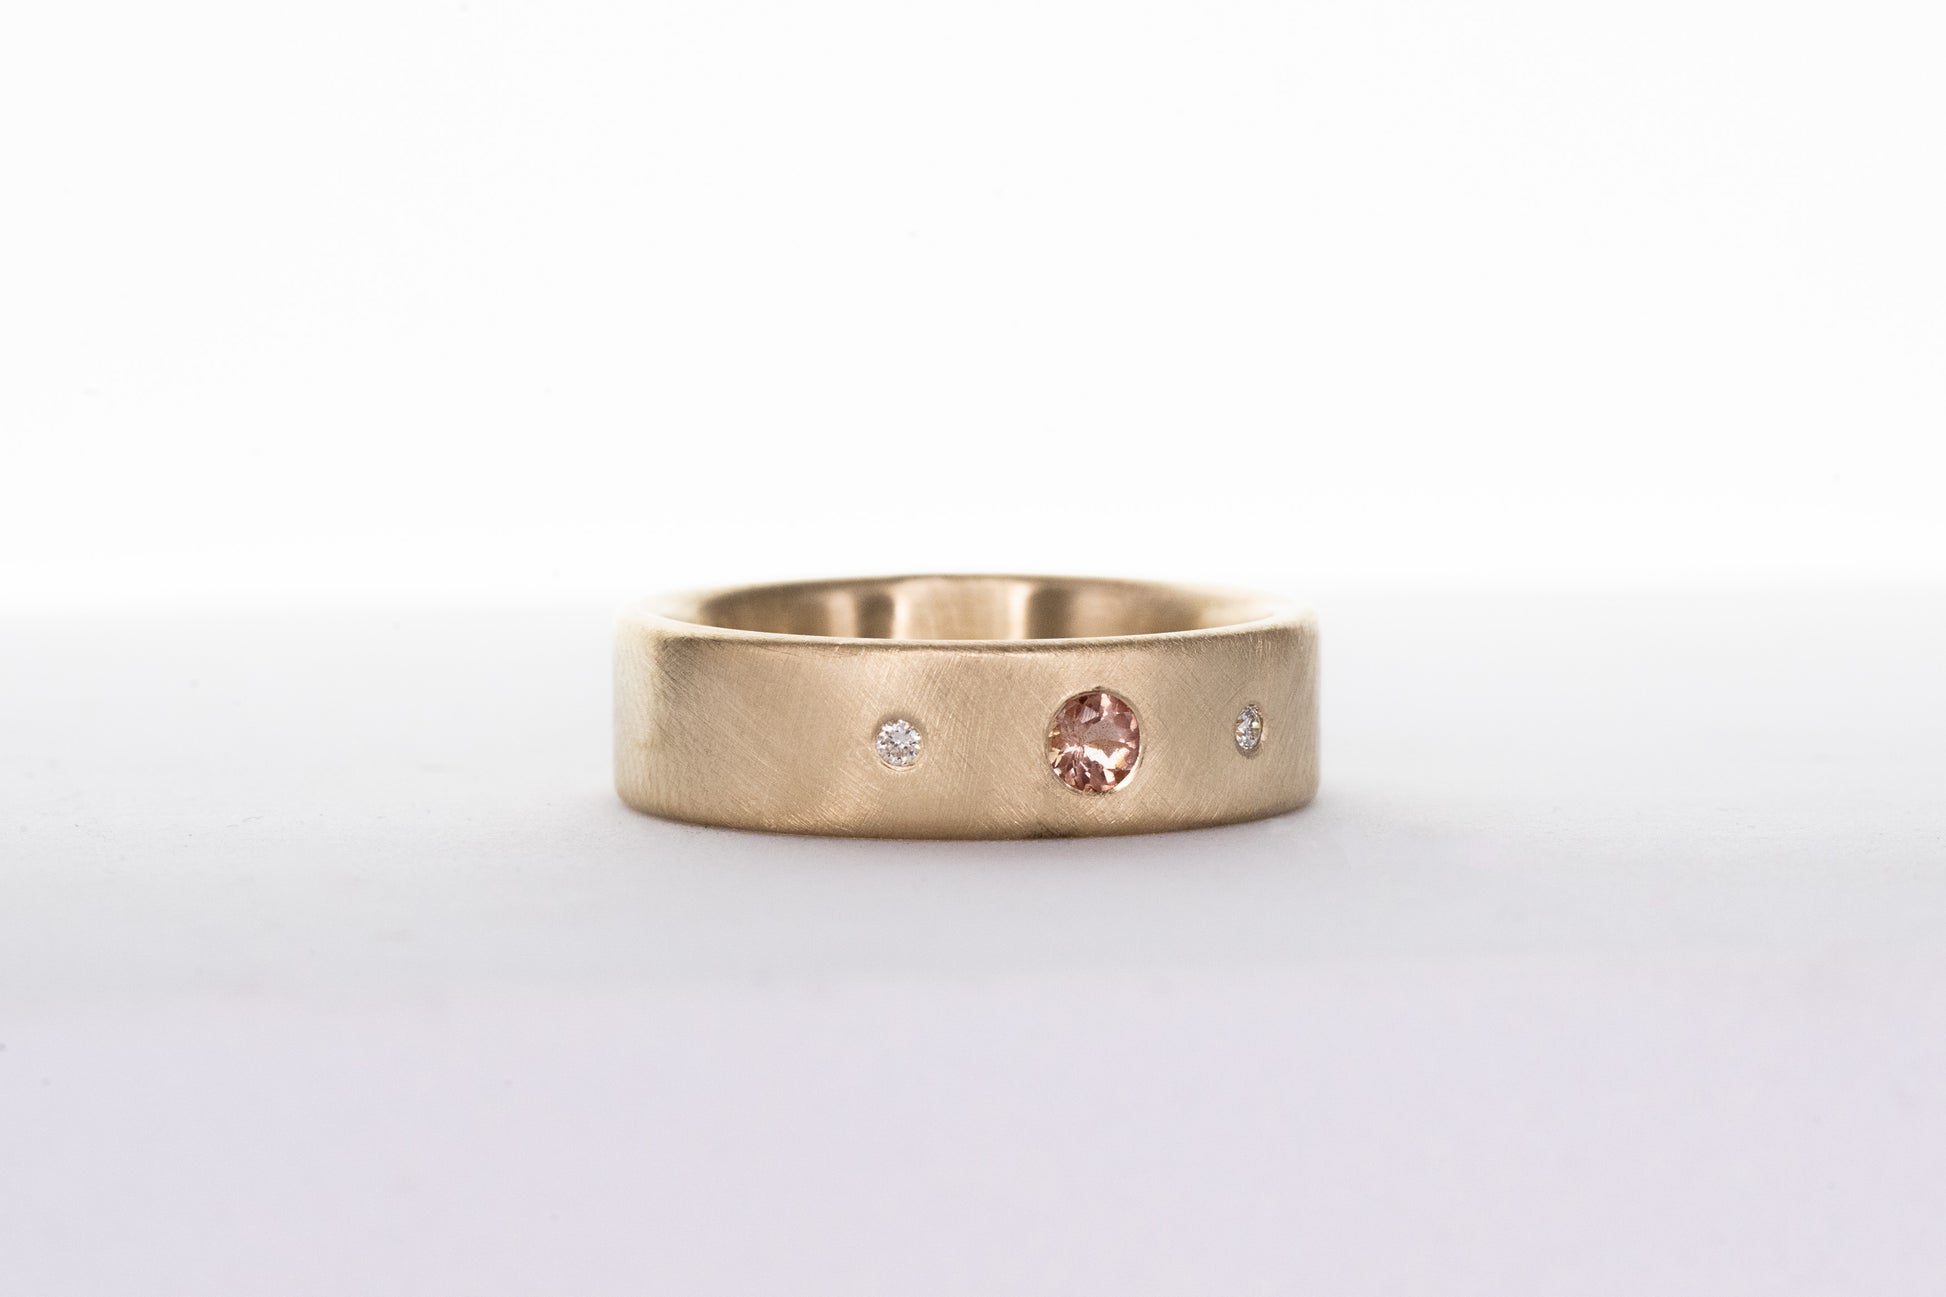 Handmade Oregon Sunstone and Diamond Wedding Ring designed by Cassin Jewelry.